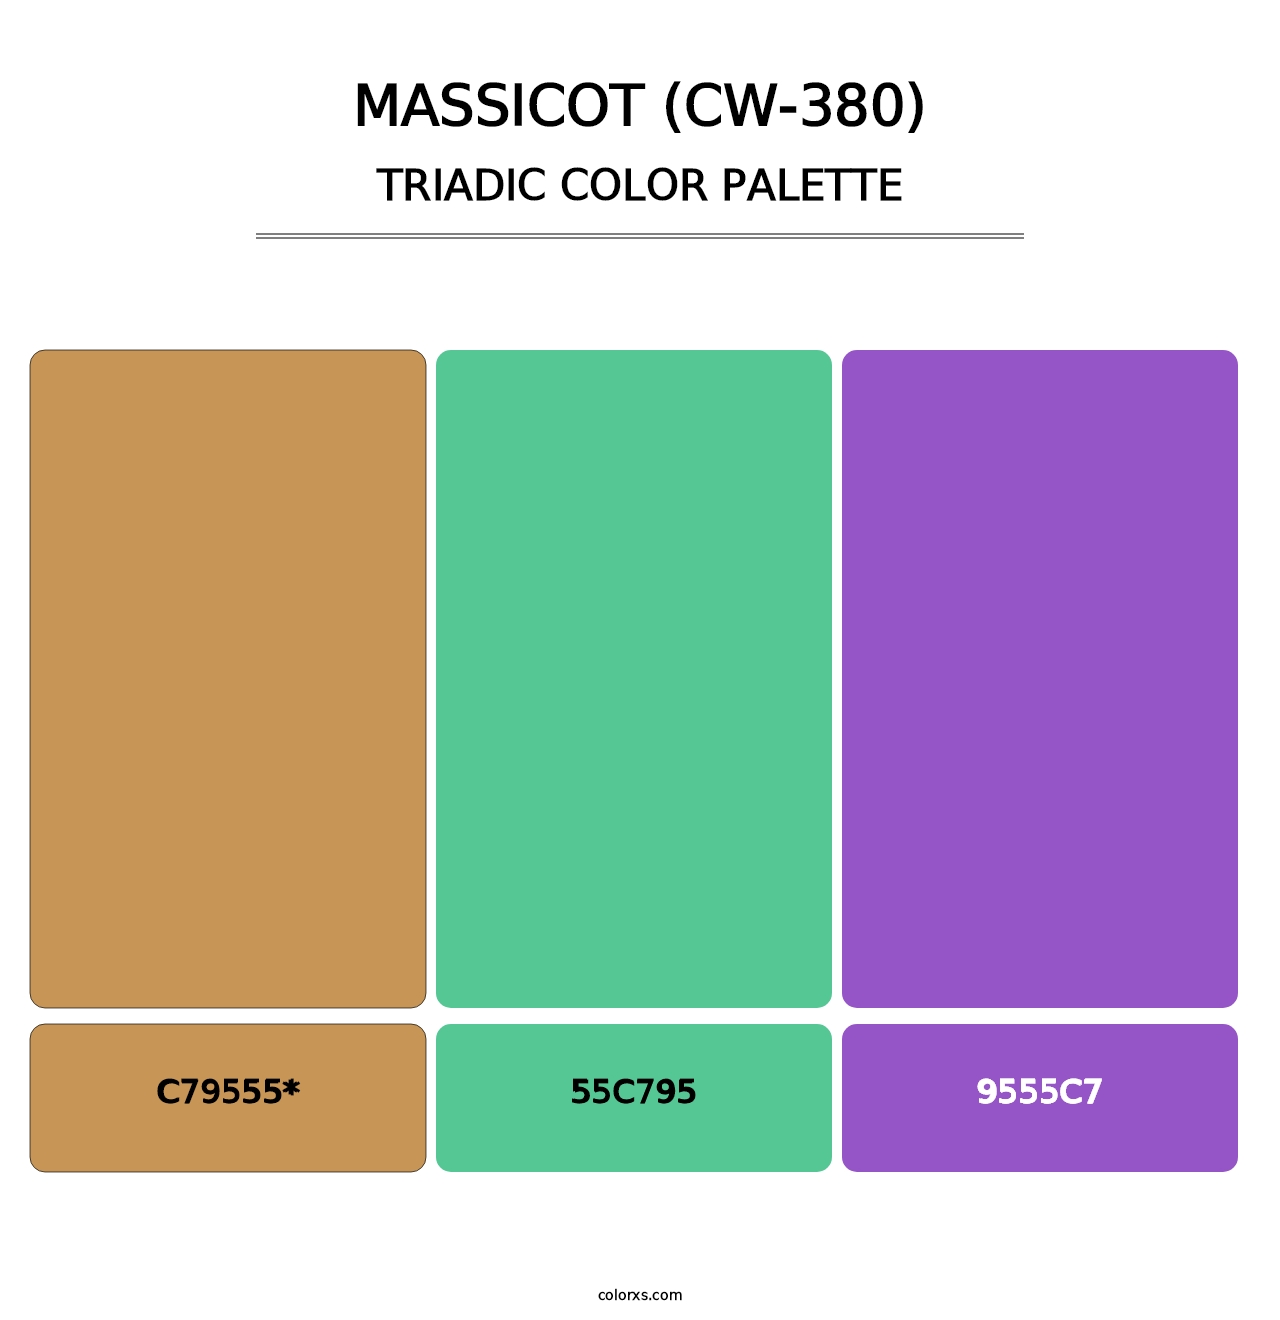 Massicot (CW-380) - Triadic Color Palette